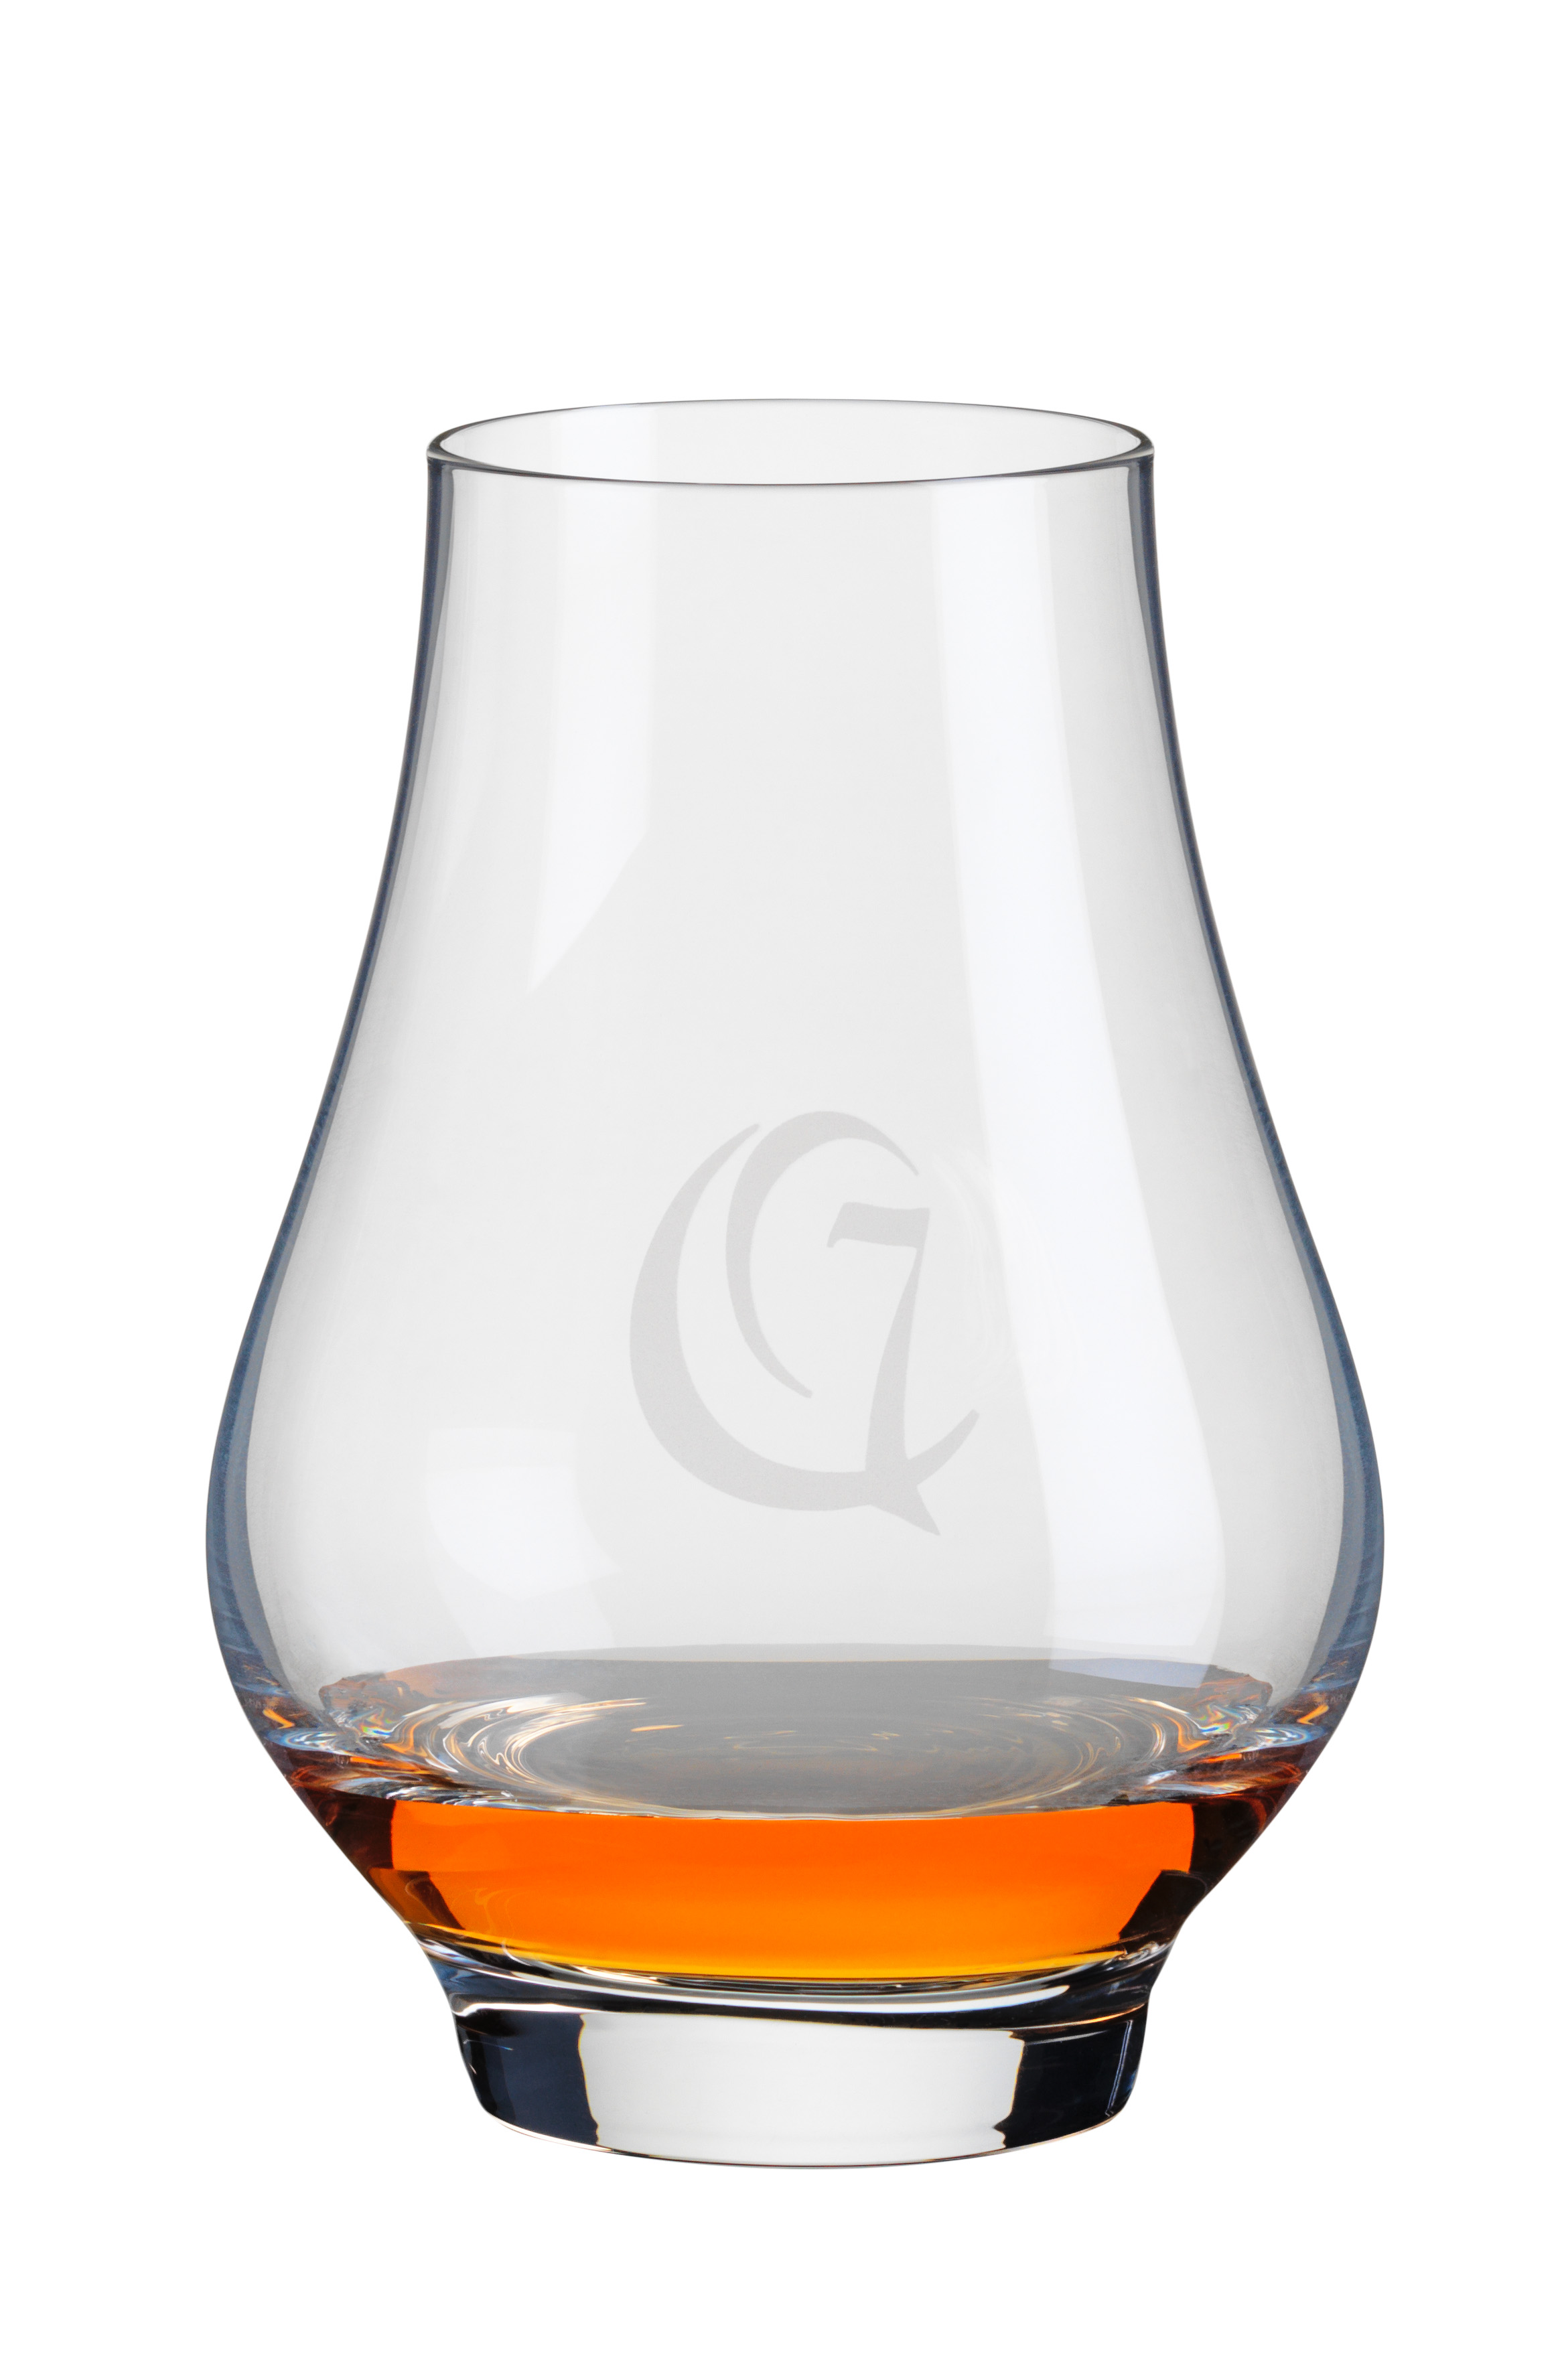 Scheibel Whisky-Set Tasting 3x 0,05l 42-58,7% Vol.